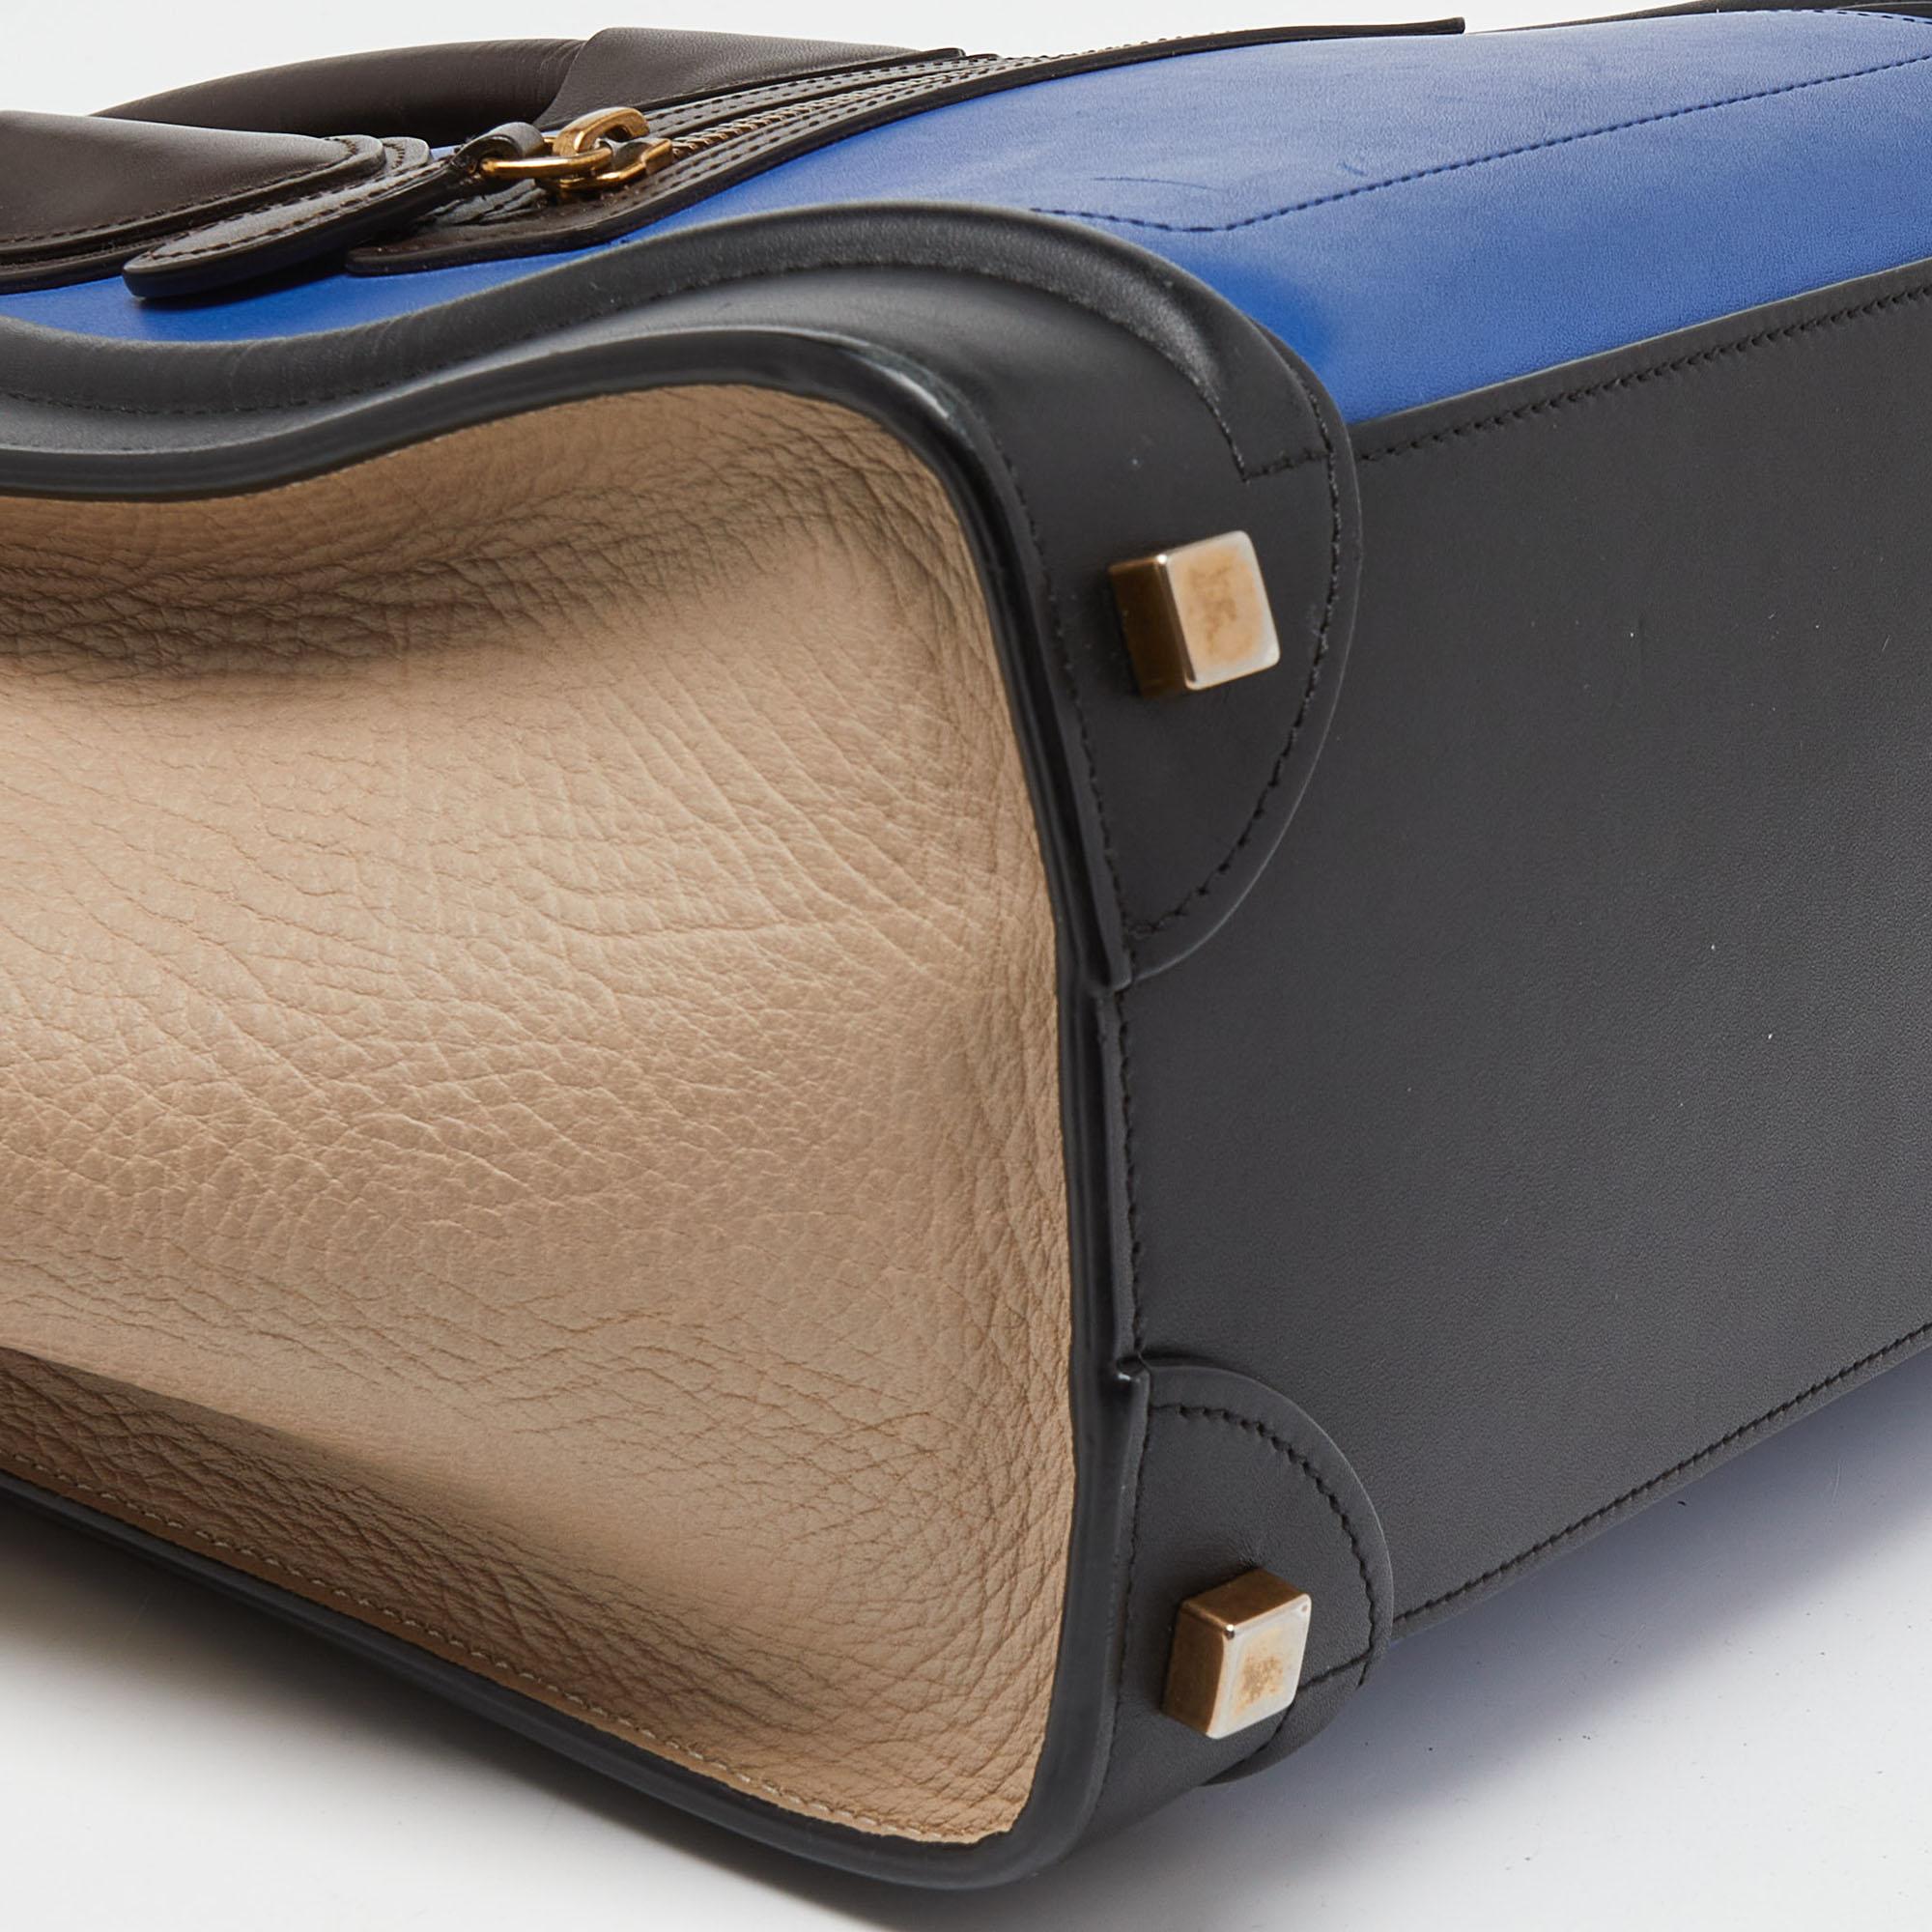 Celine Multicolor Leather Micro Luggage Tote For Sale 2